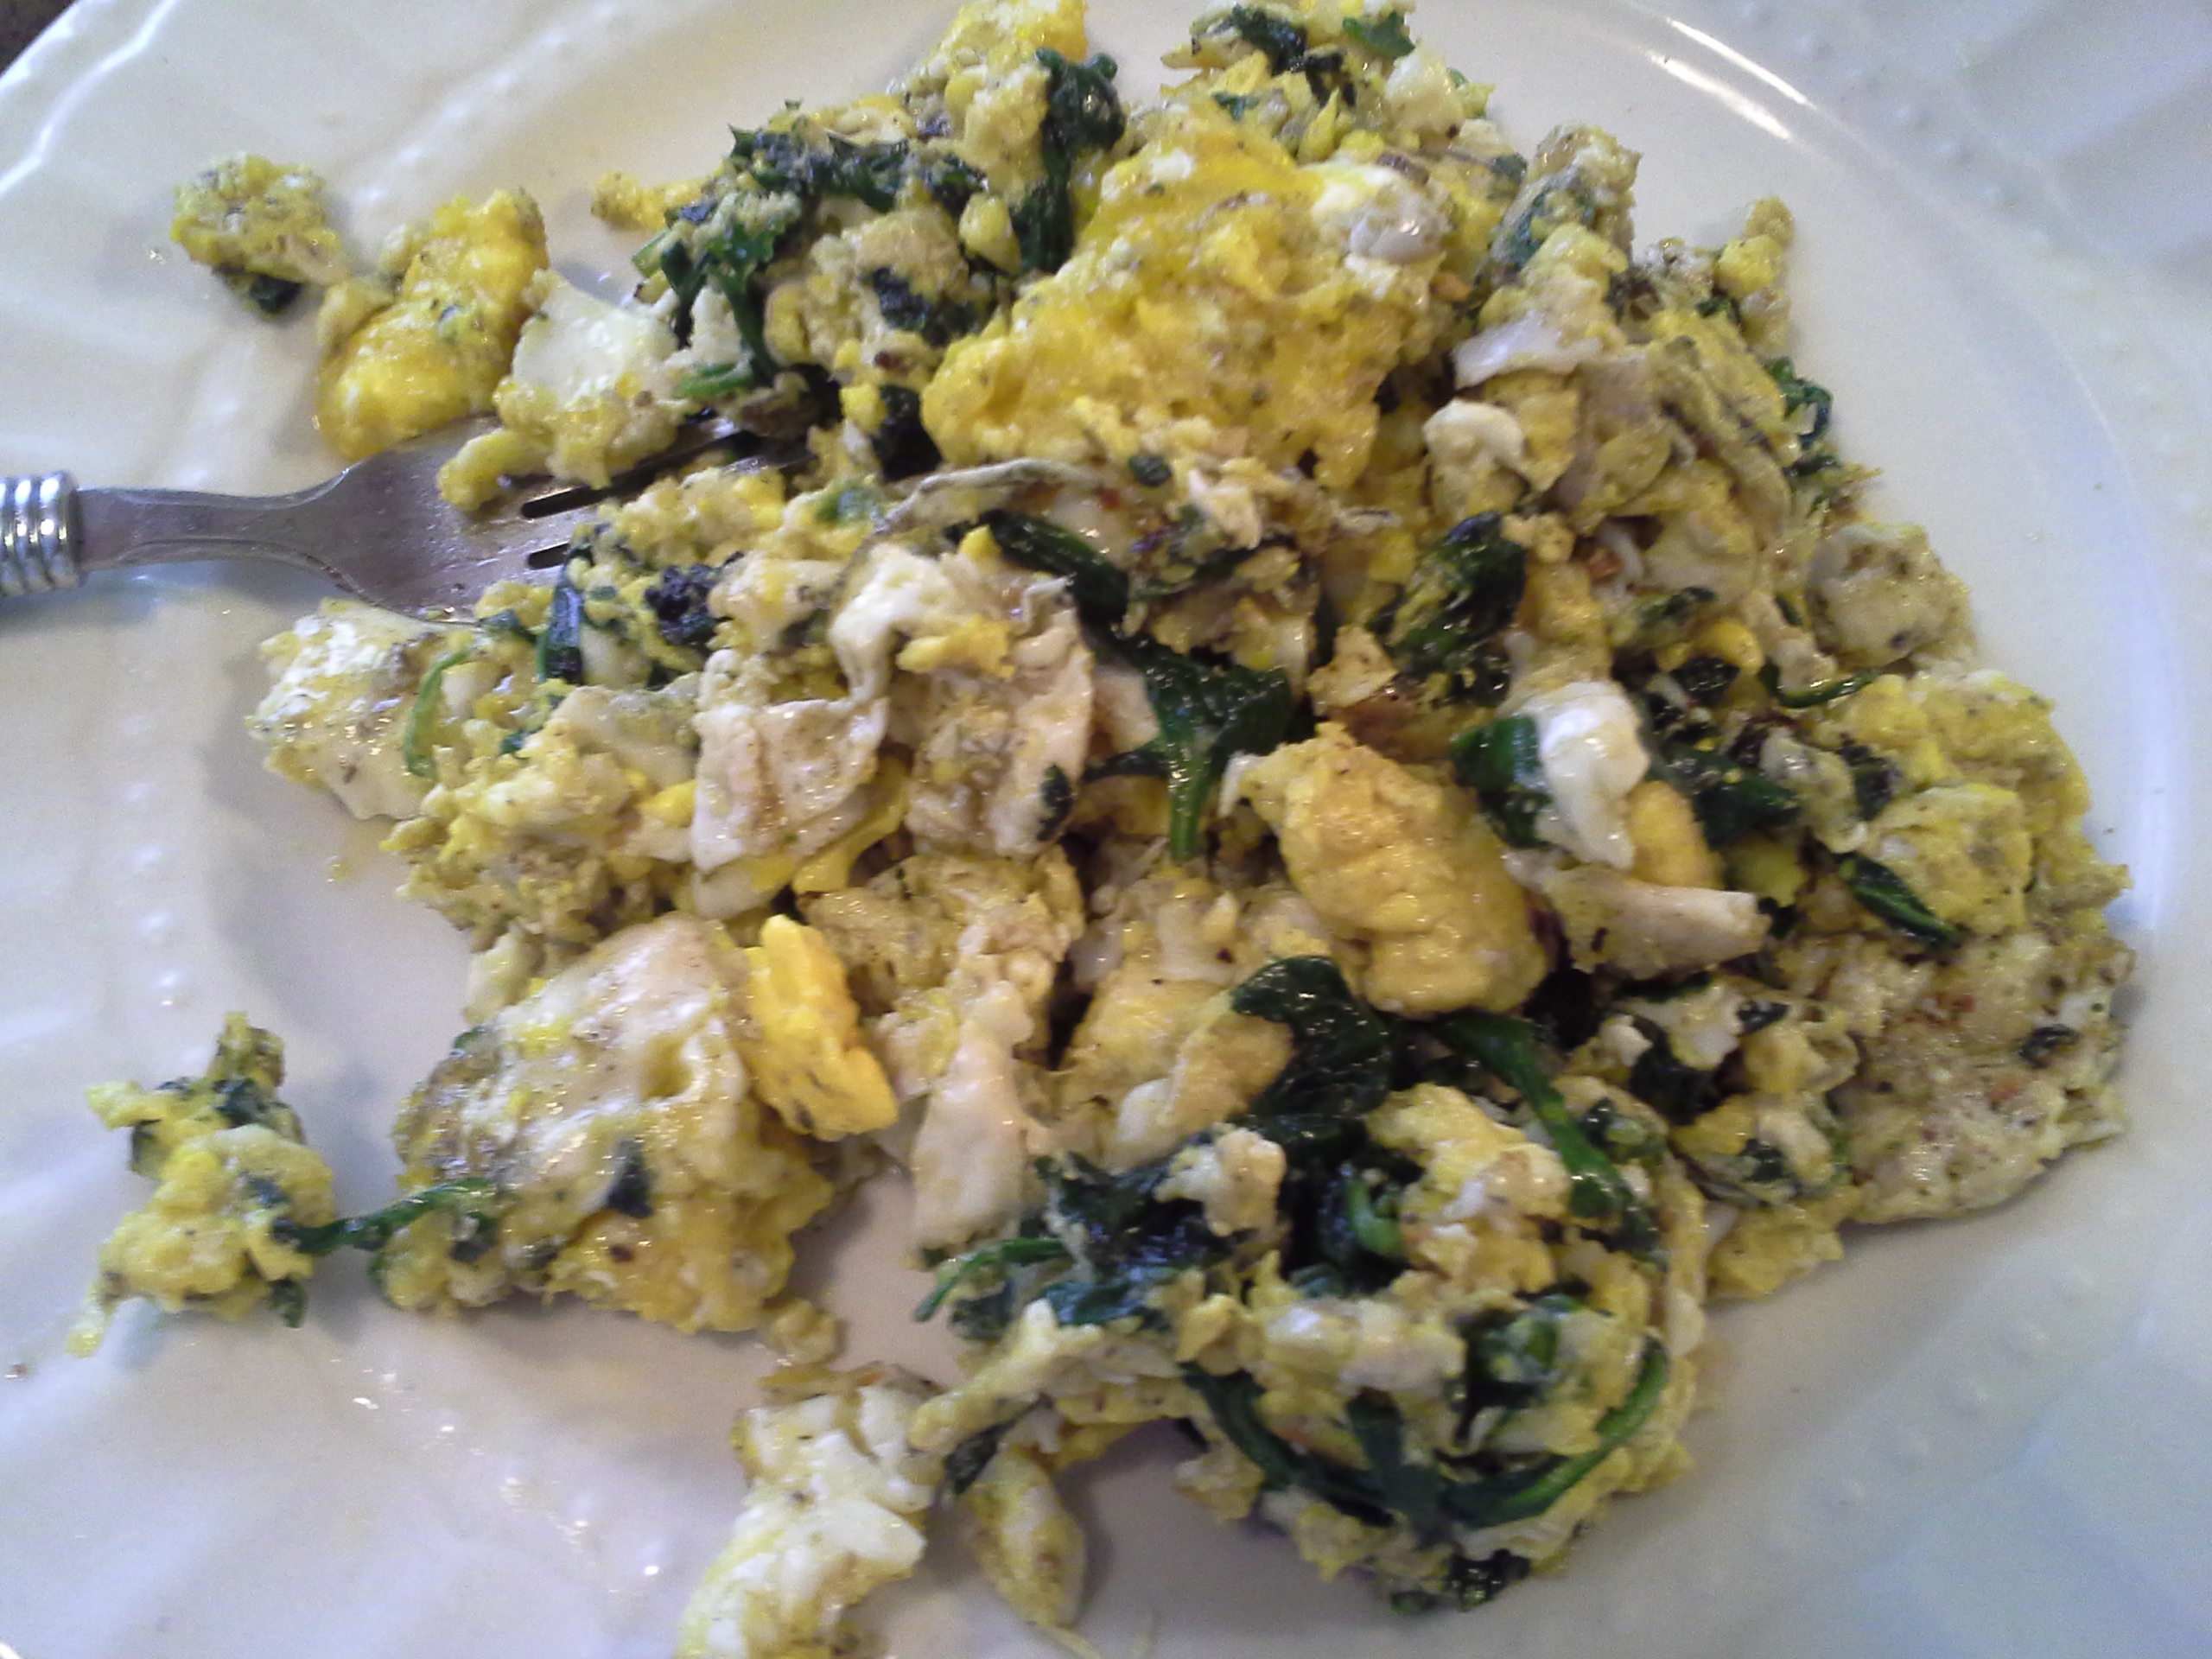 Breakfast: 11:30 a.m. | 4 eggs, 2 oz. greens mix, 2 Tbsp. coconut oil, herbs & spices